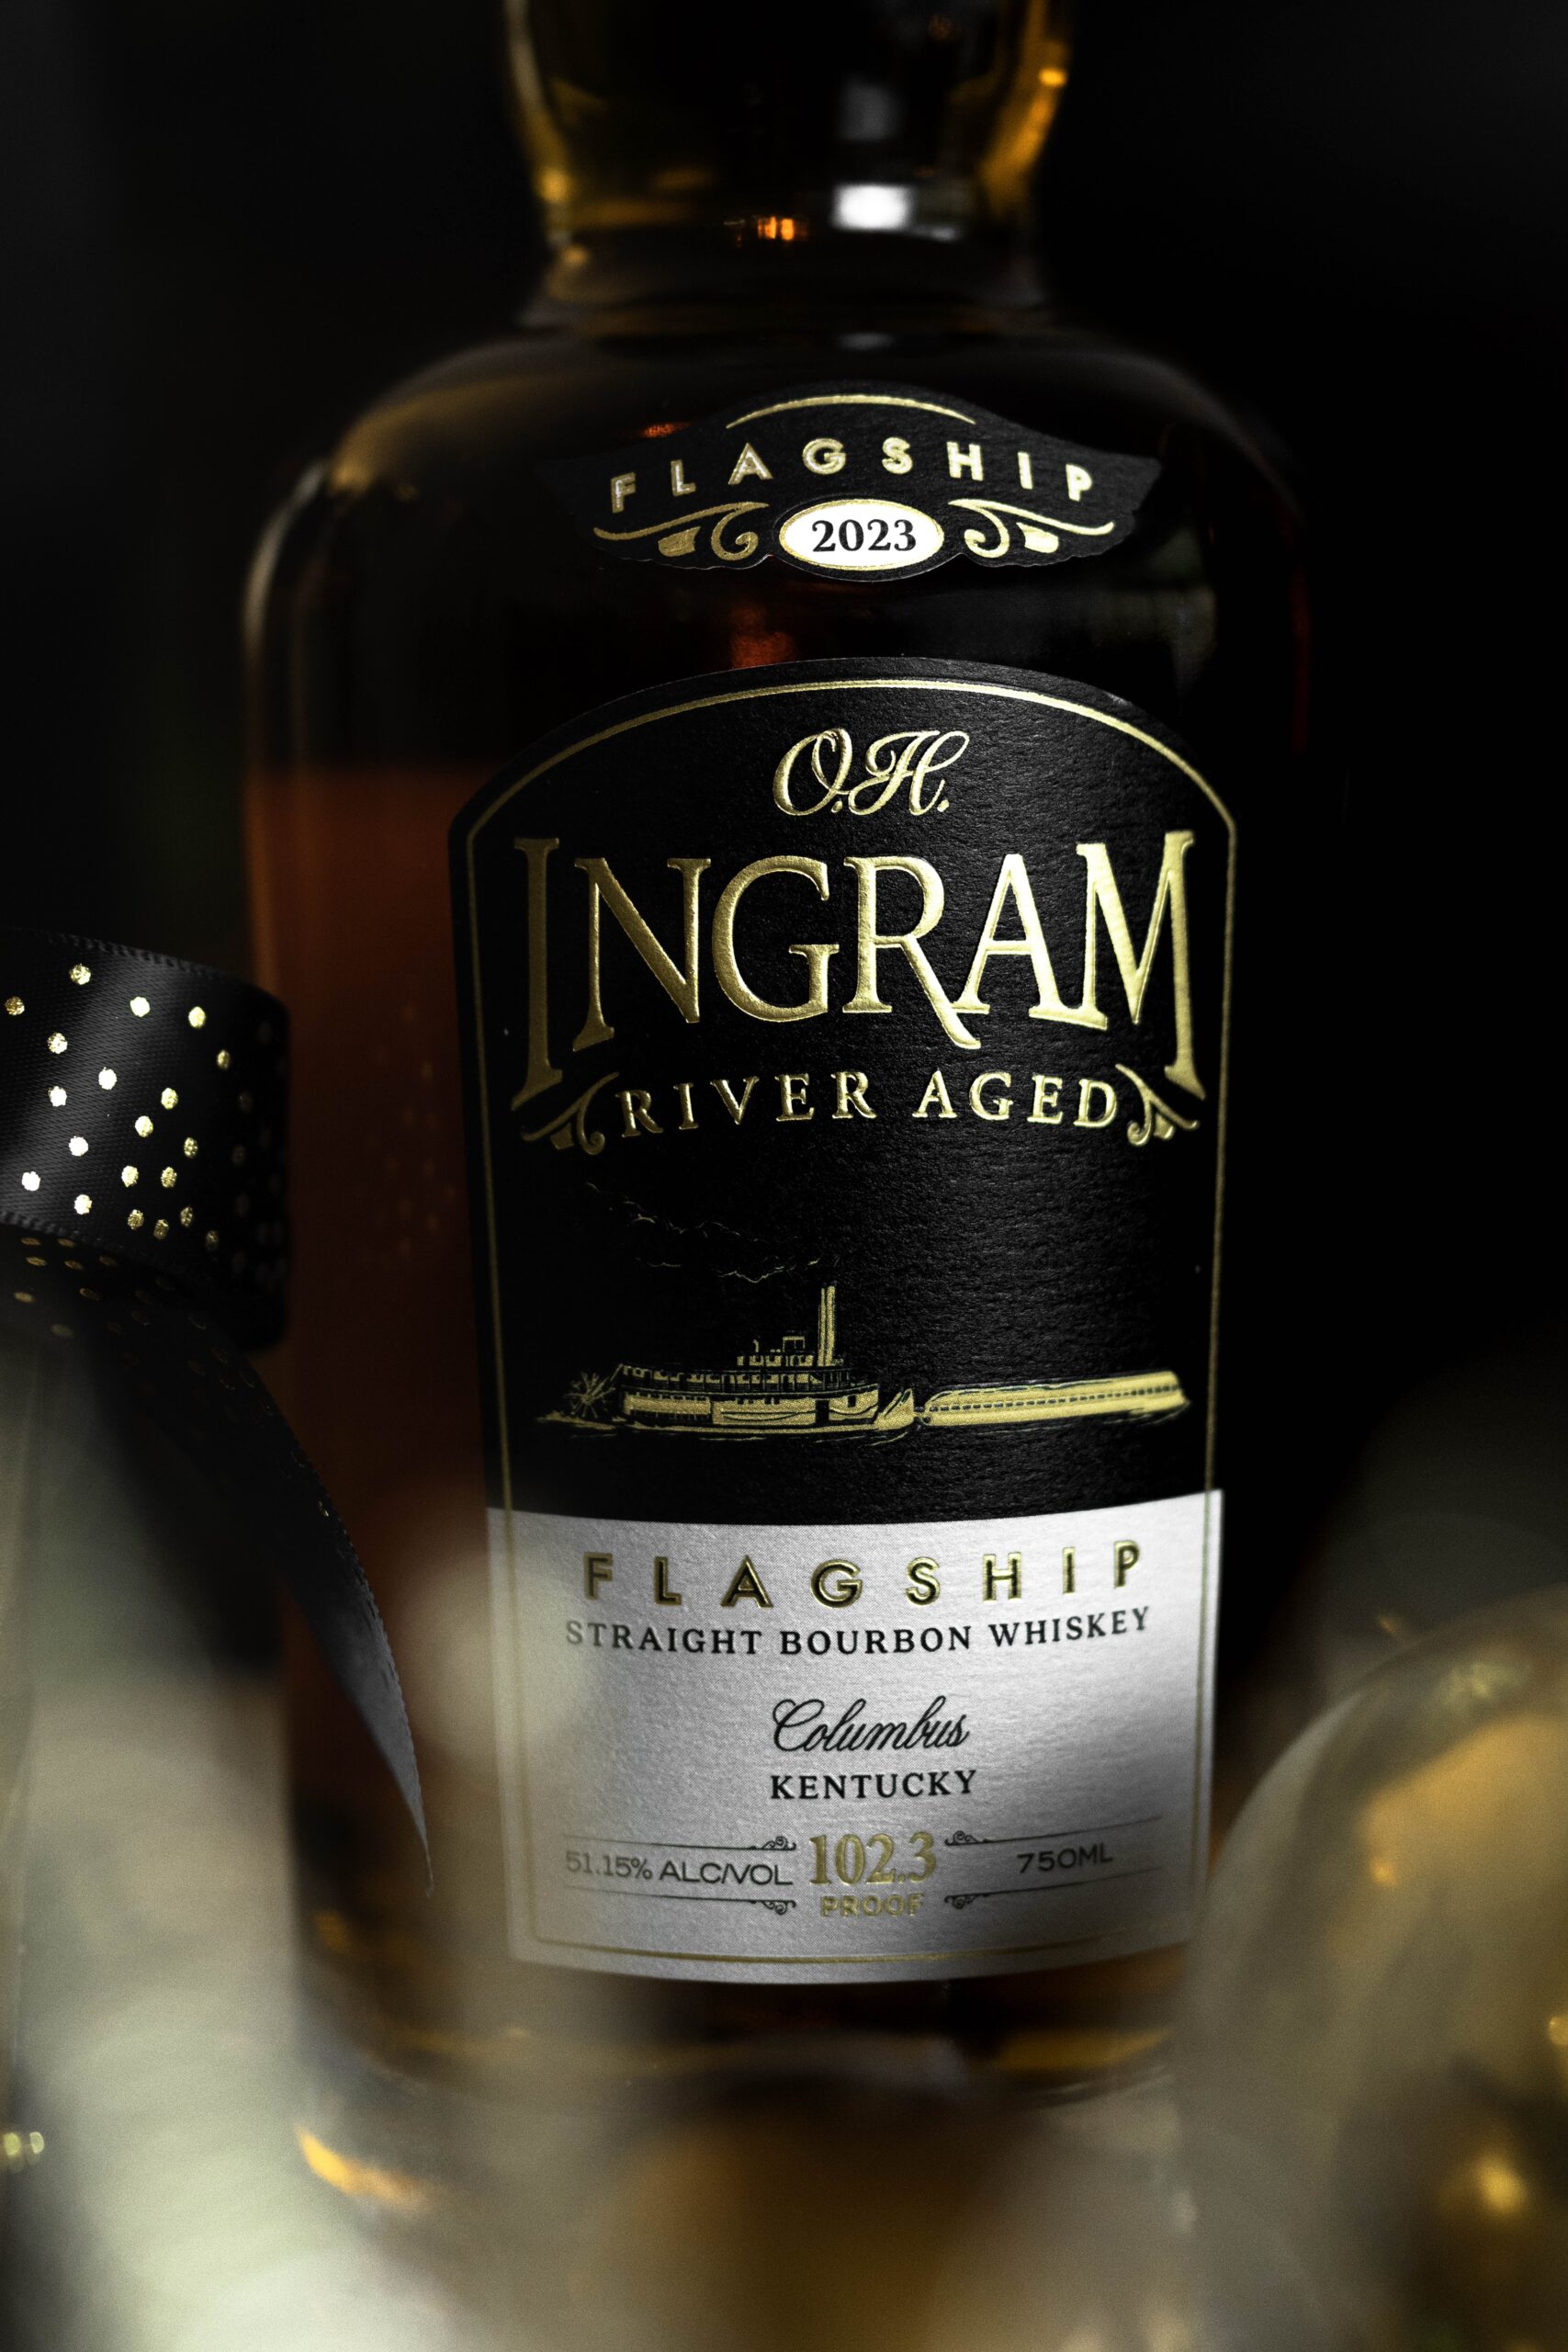 O.H. Ingram River Aged Releasing Third Annual Flagship Bourbon